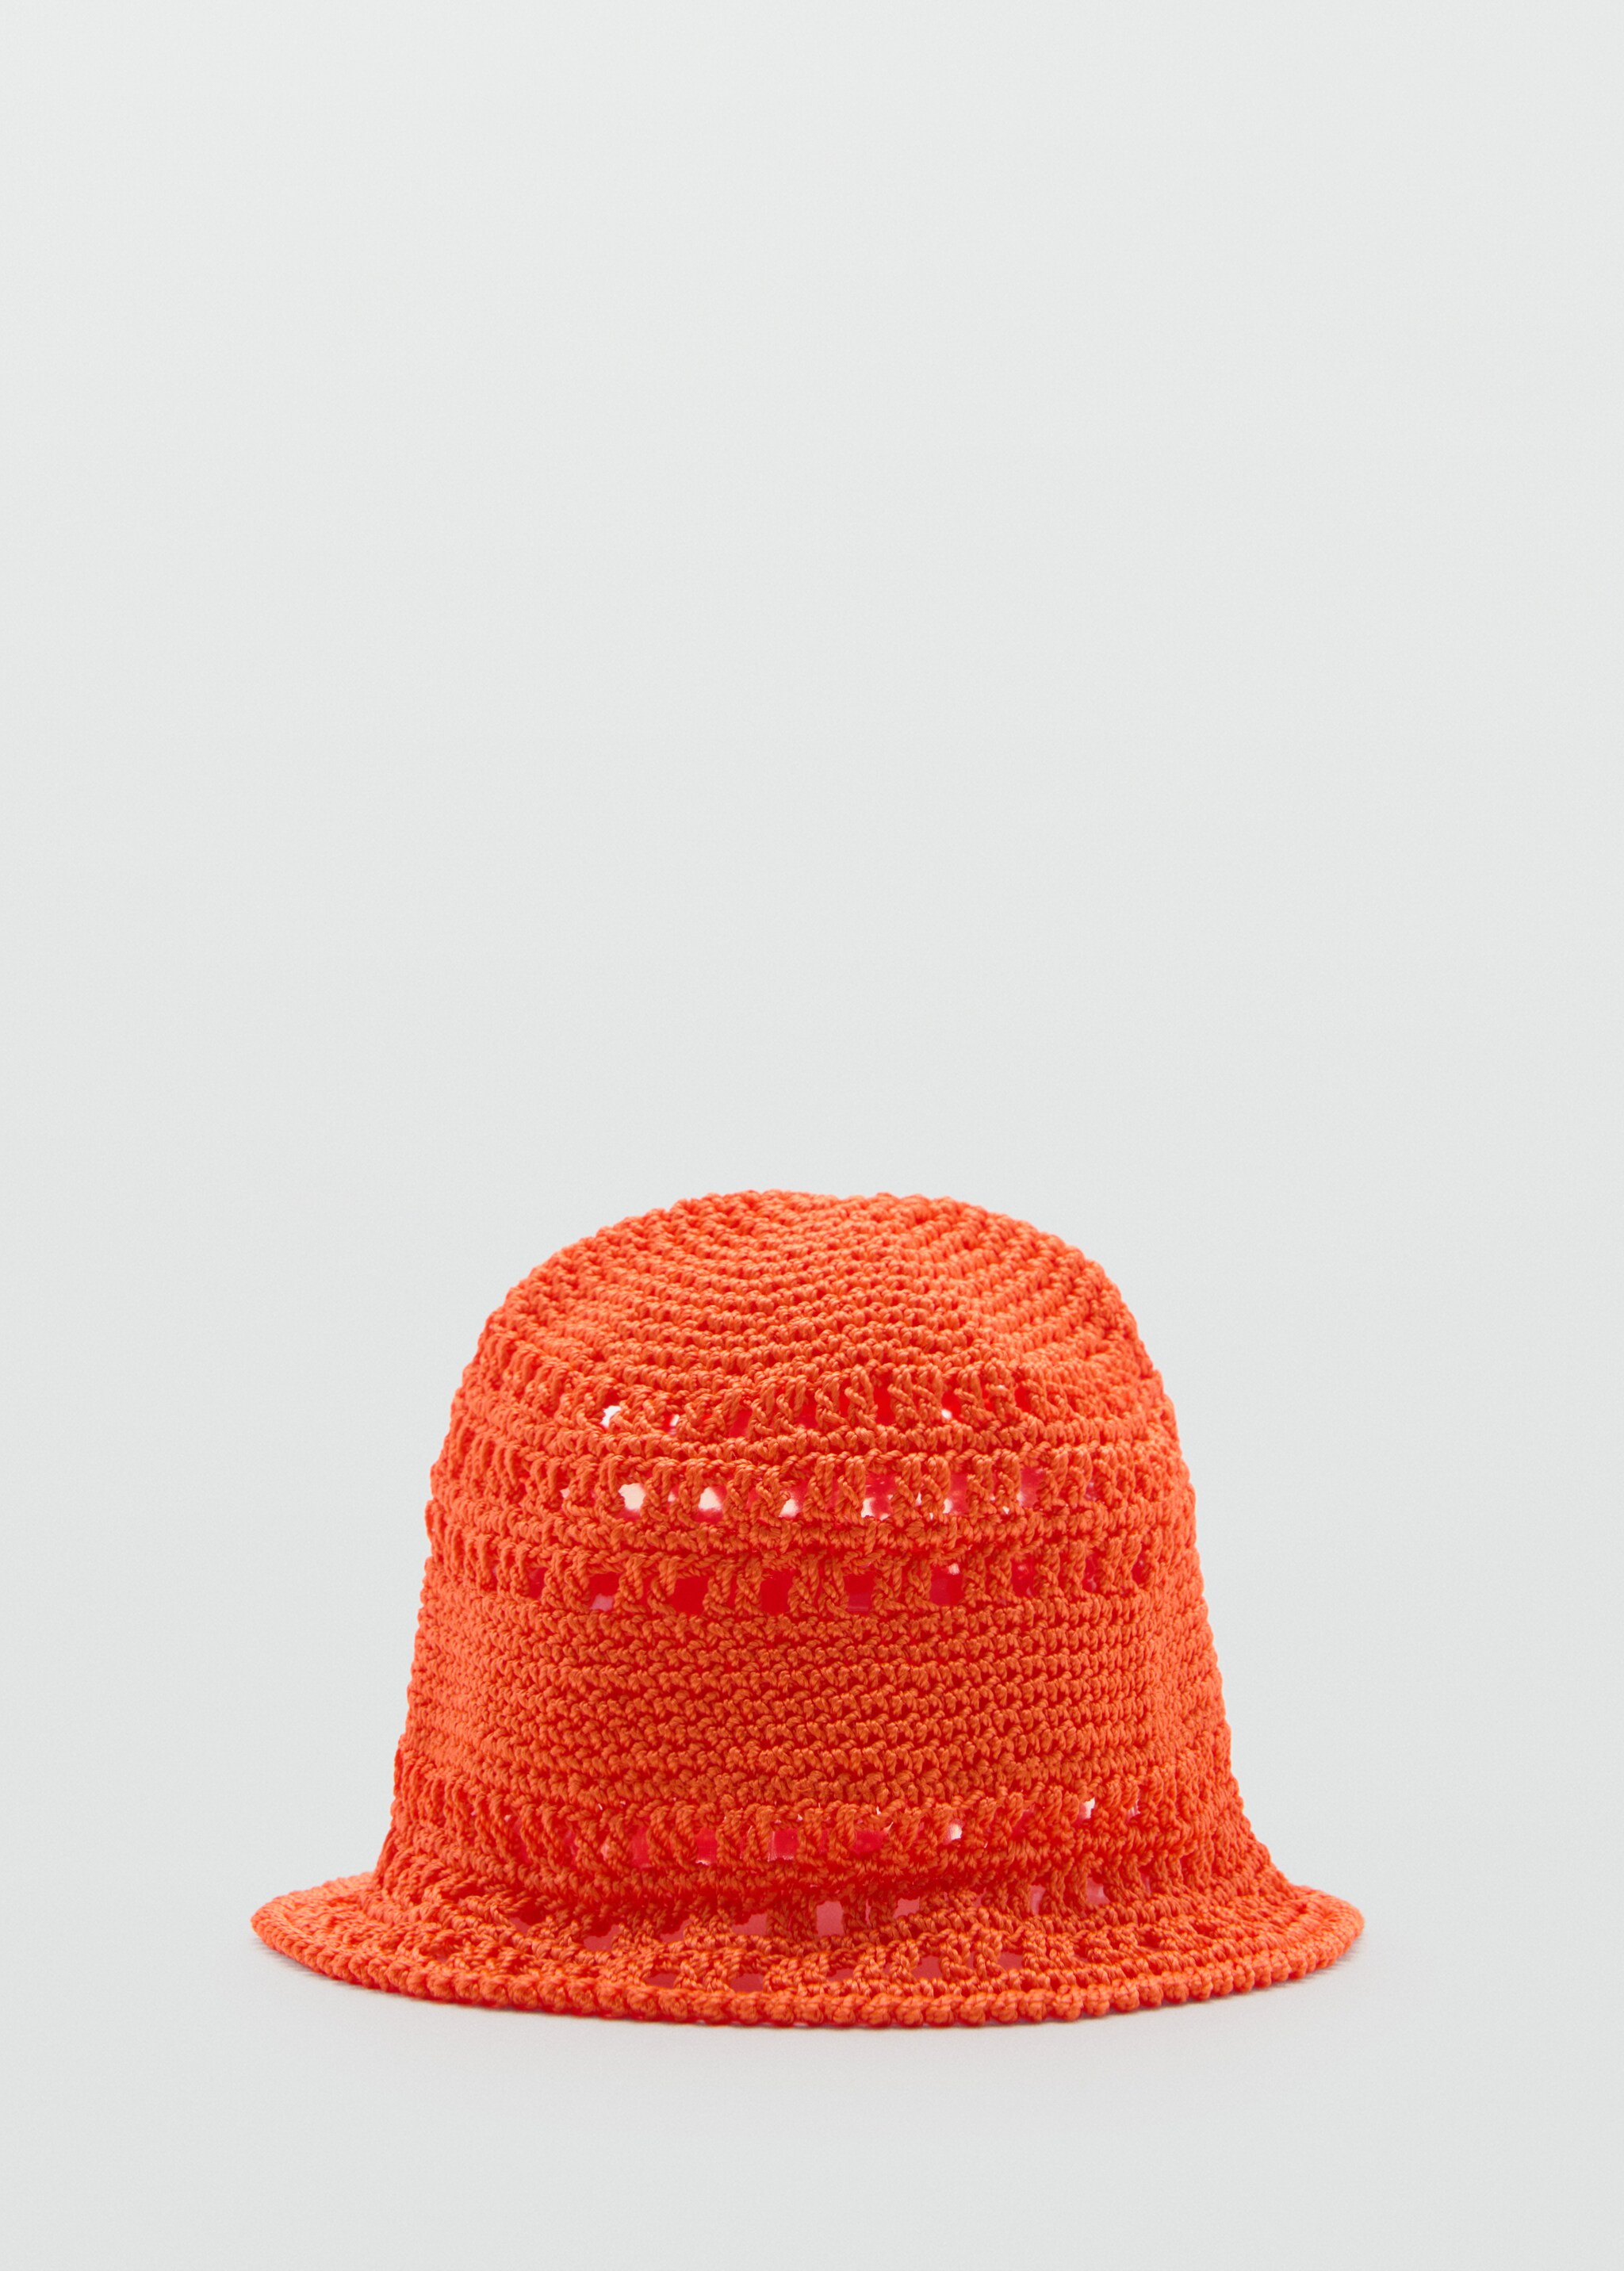 Crochet buckethat - Artikel zonder model